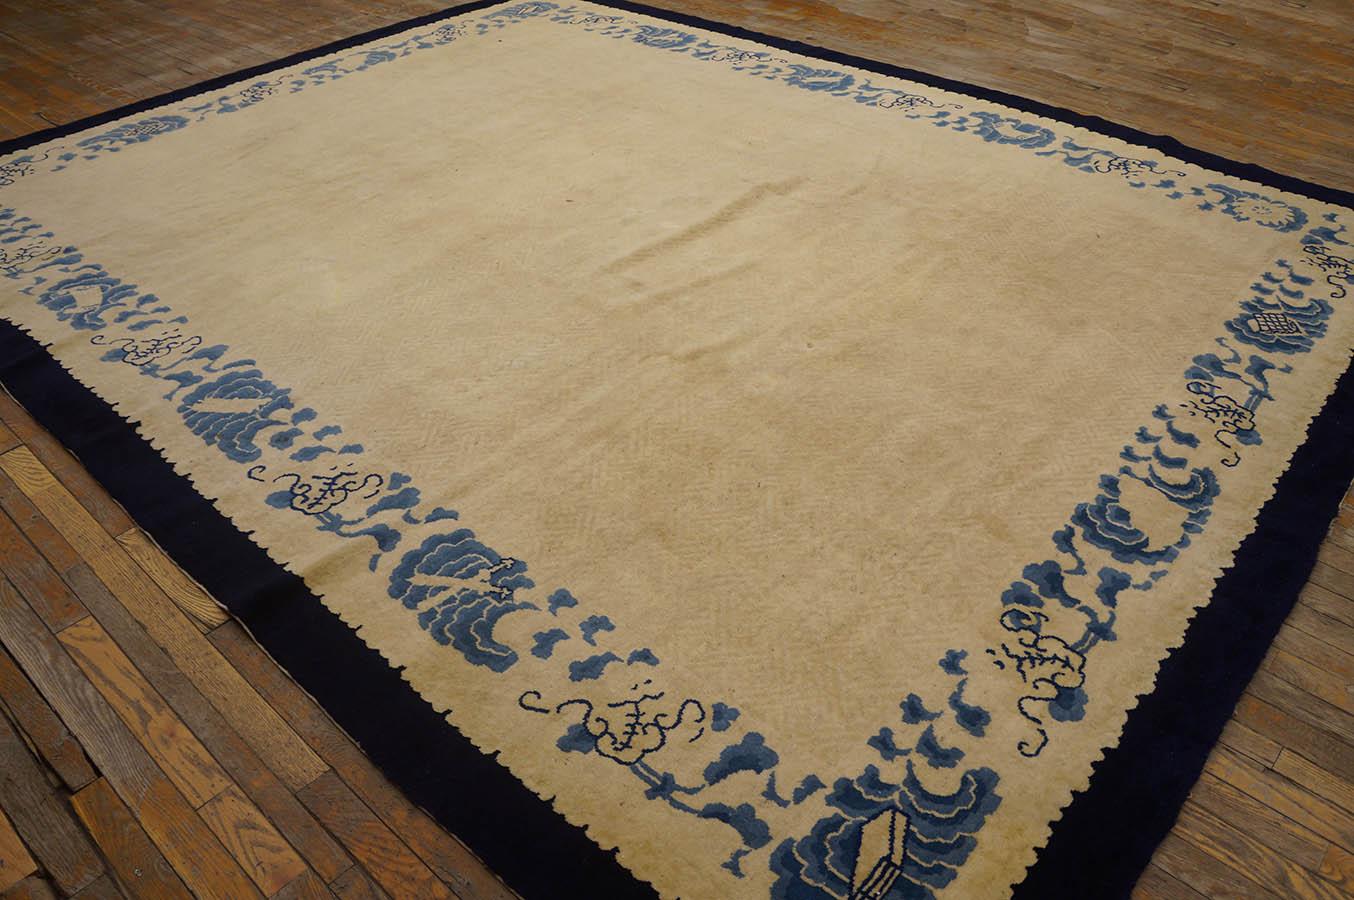 19th Century Chinese Peking Carpet with Tone-on-Tone Pattern
9'2'' x 11'8'' - 280 x 355